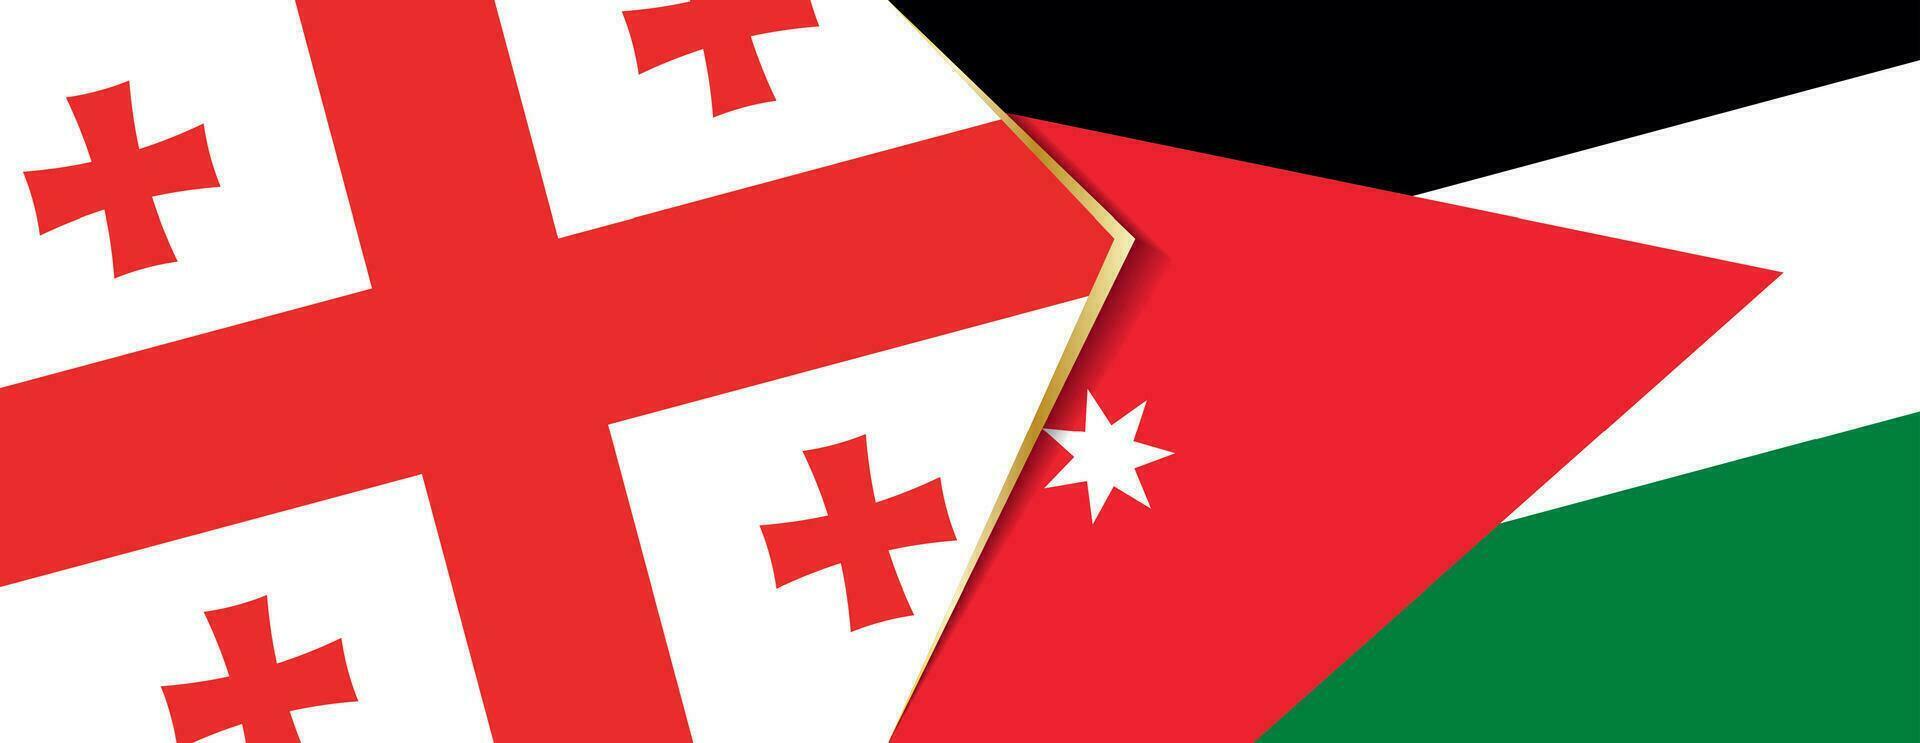 geórgia e Jordânia bandeiras, dois vetor bandeiras.